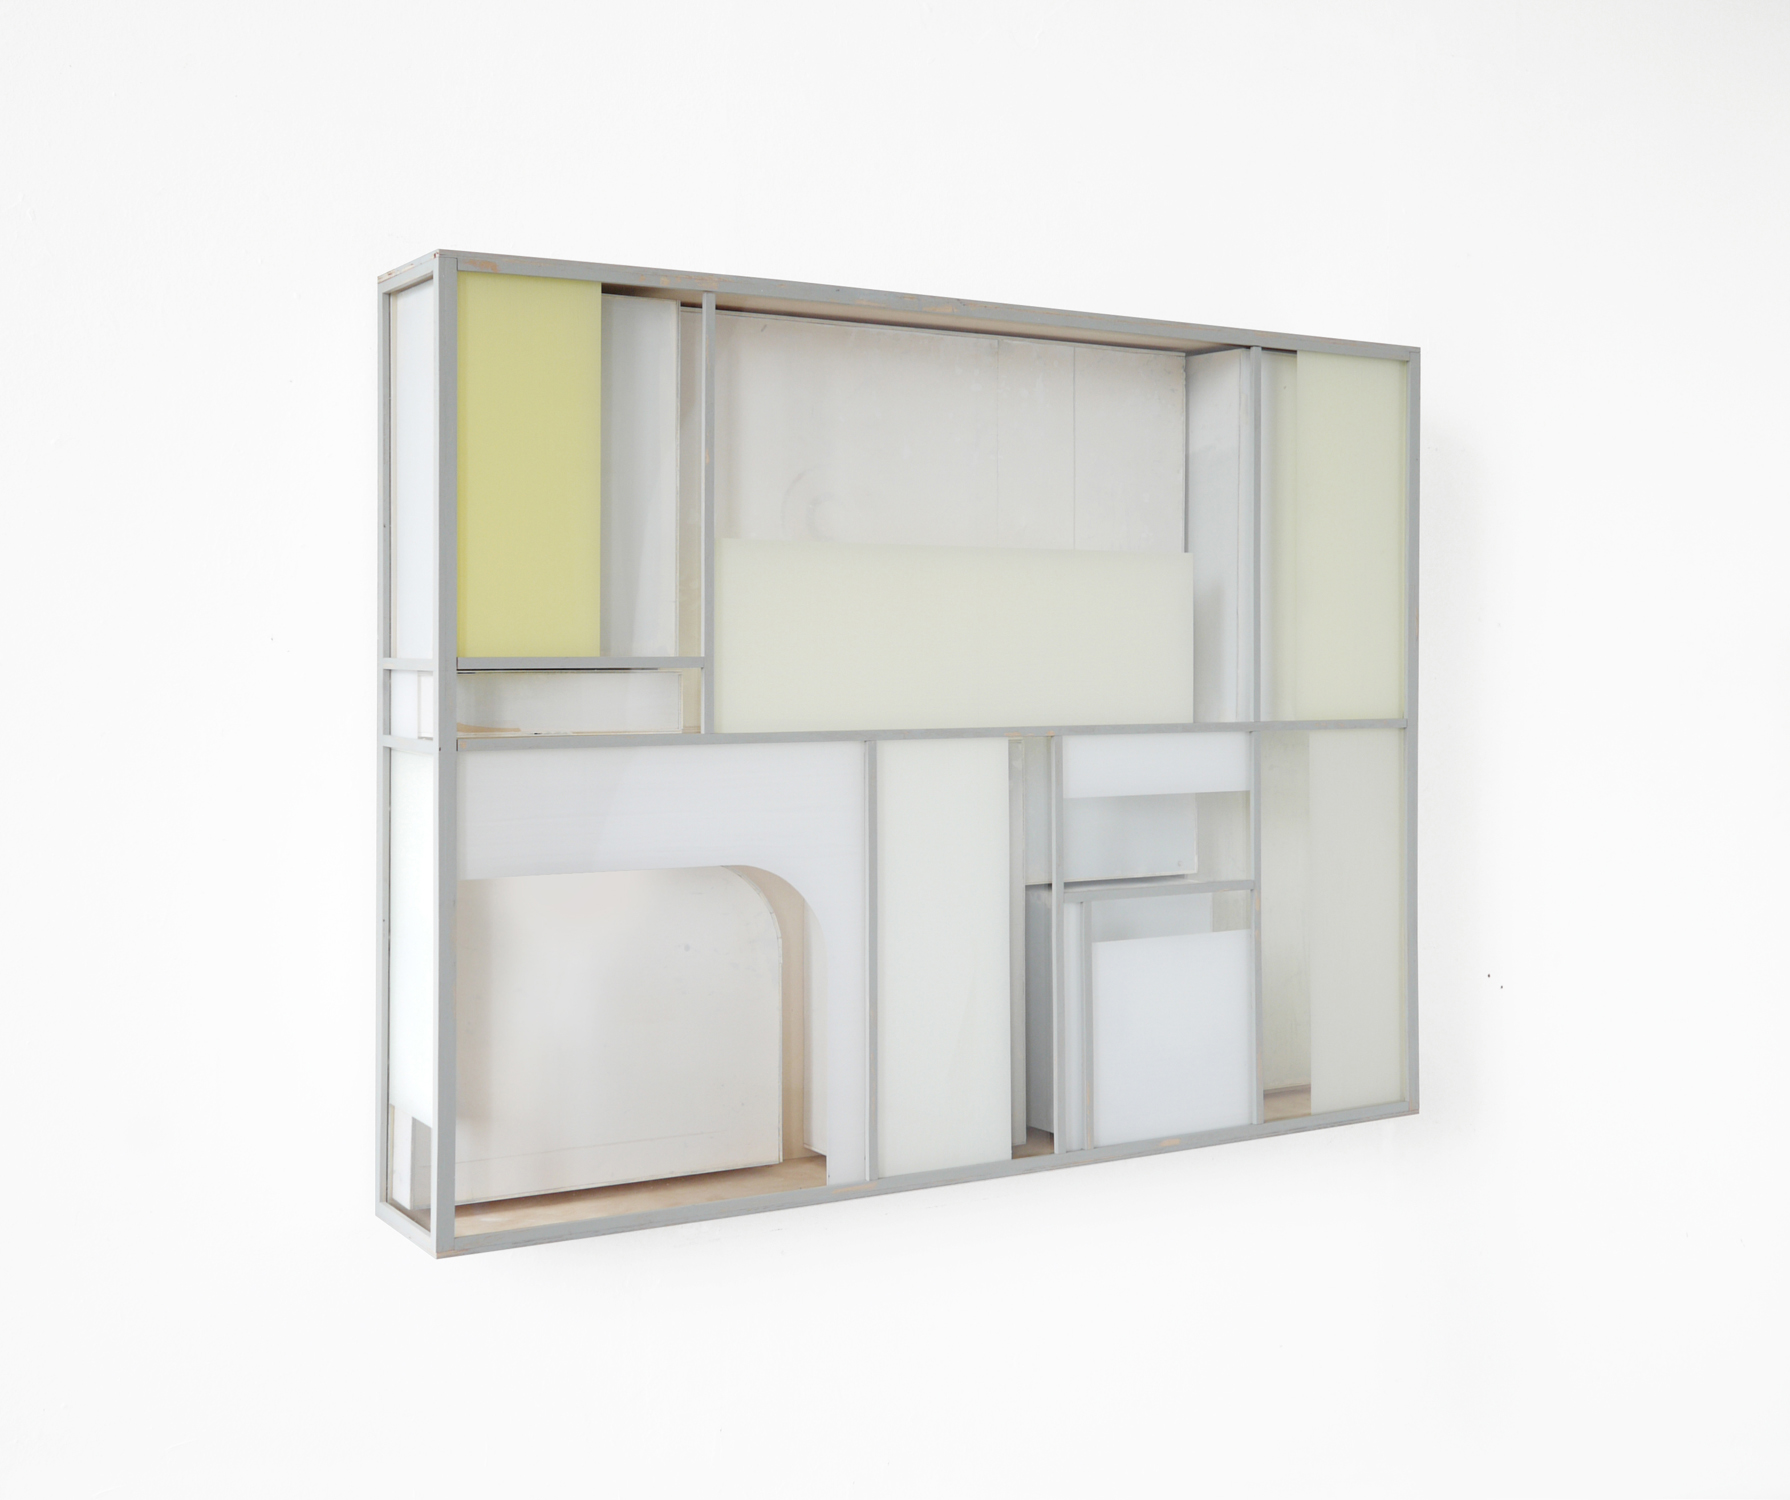  Minimal KA, 2018, Holz, Acrylglas, Farbe, 89 x 117 x 17 cm 